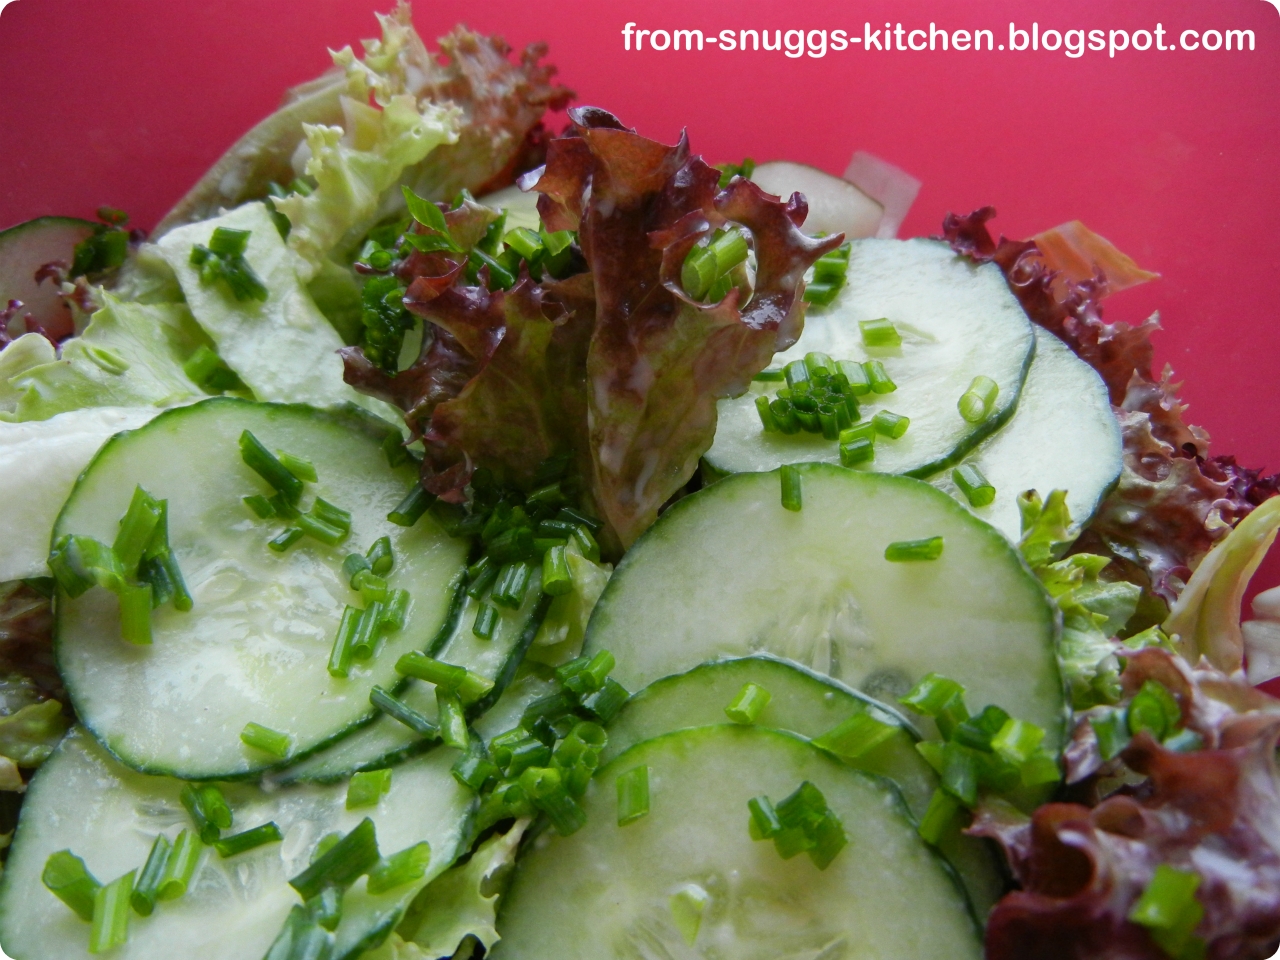 Gurkensalat mal anders - From-Snuggs-Kitchen